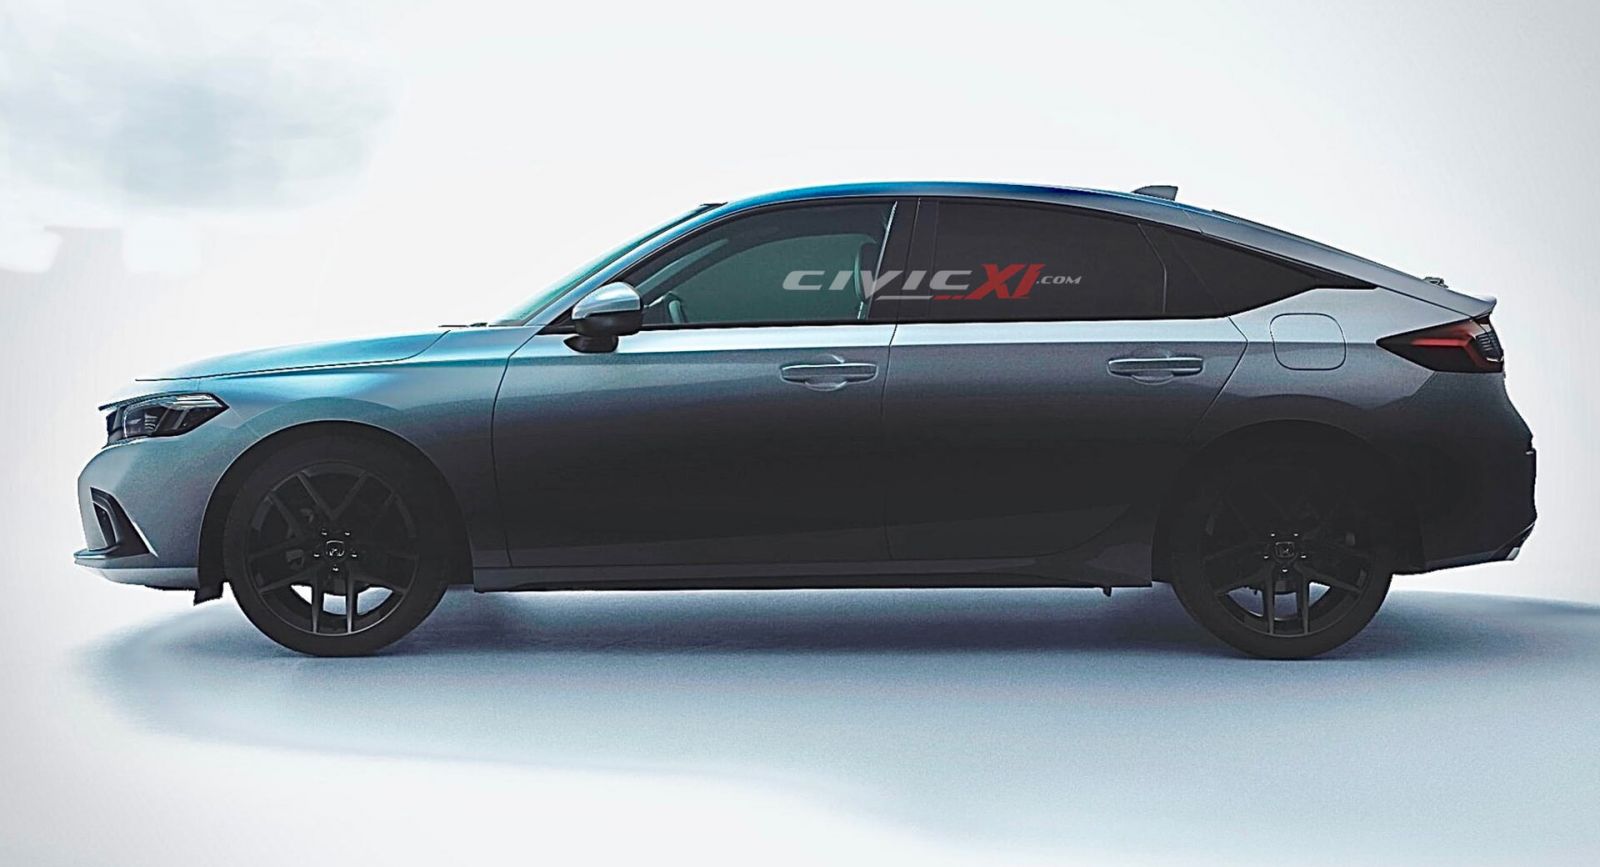 Teaser Honda Civic Hatchback by CivicXI